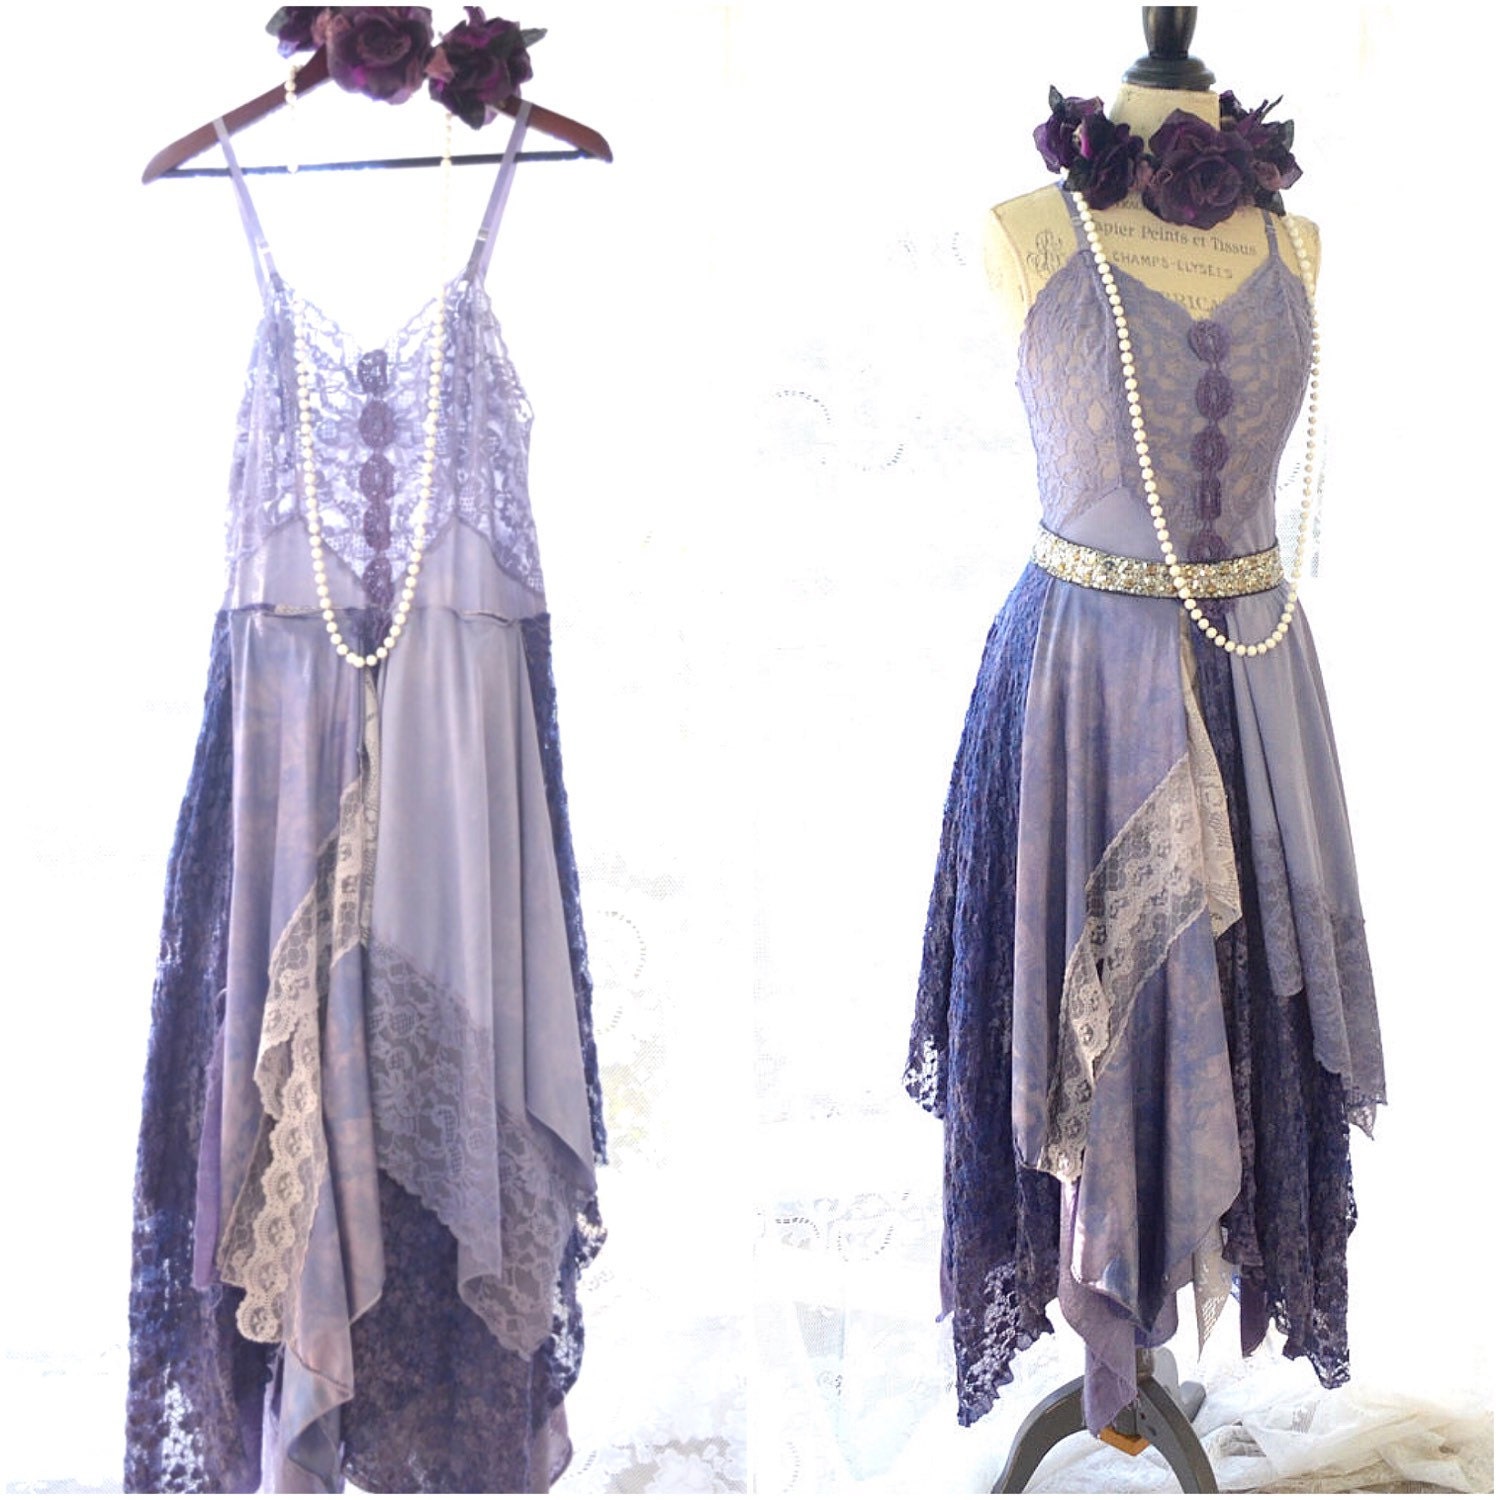 Gypsy Maxi Dress boho chic dress shabby by TrueRebelClothing